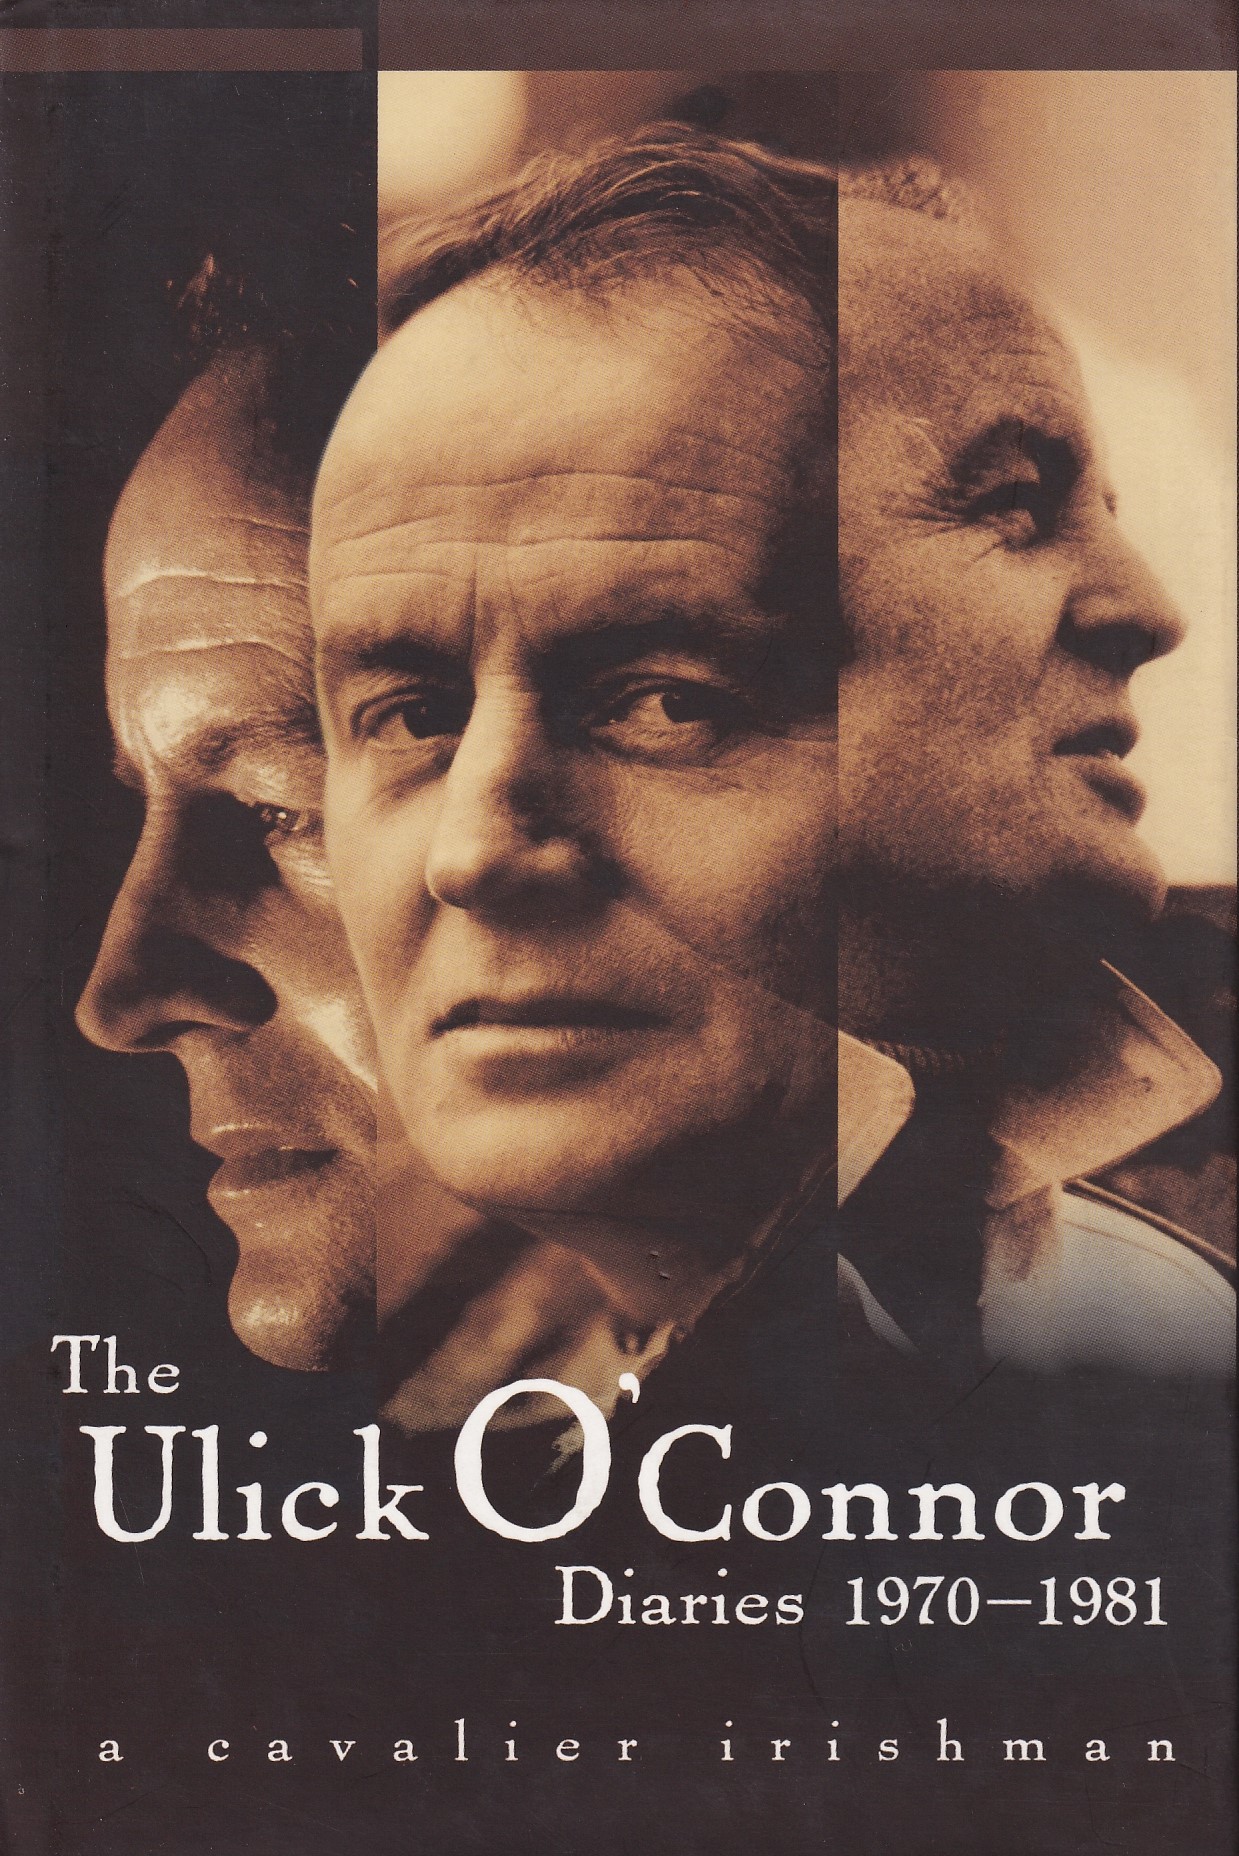 The Ulick O’Connor Diaries, 1970-1981: A Cavalier Irishman by Ulick O'Connor